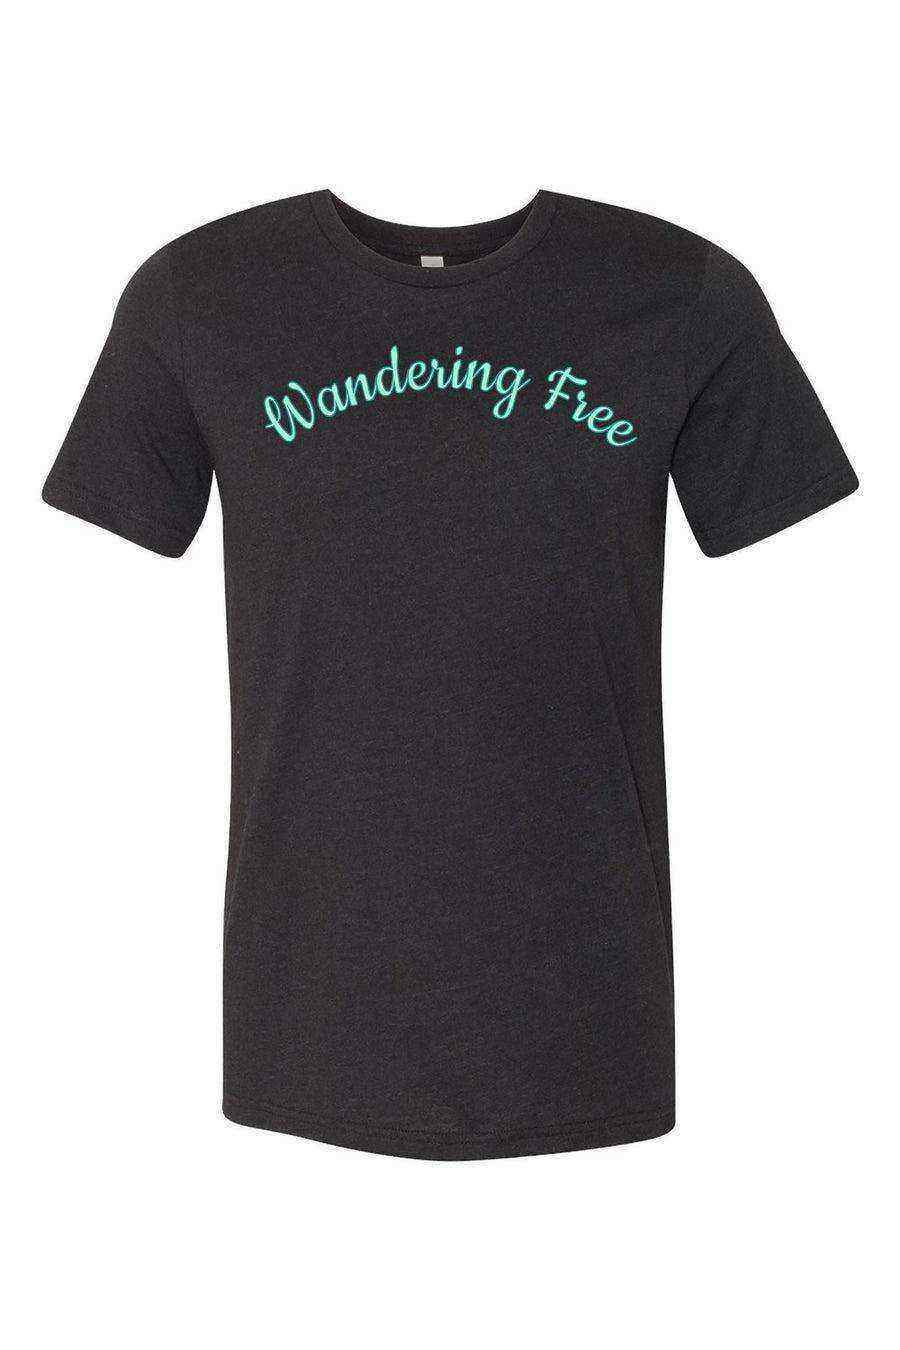 Womens | Wandering Free Shirt | Mermaid Shirt | Part Of Your World Shirt - Dylan's Tees